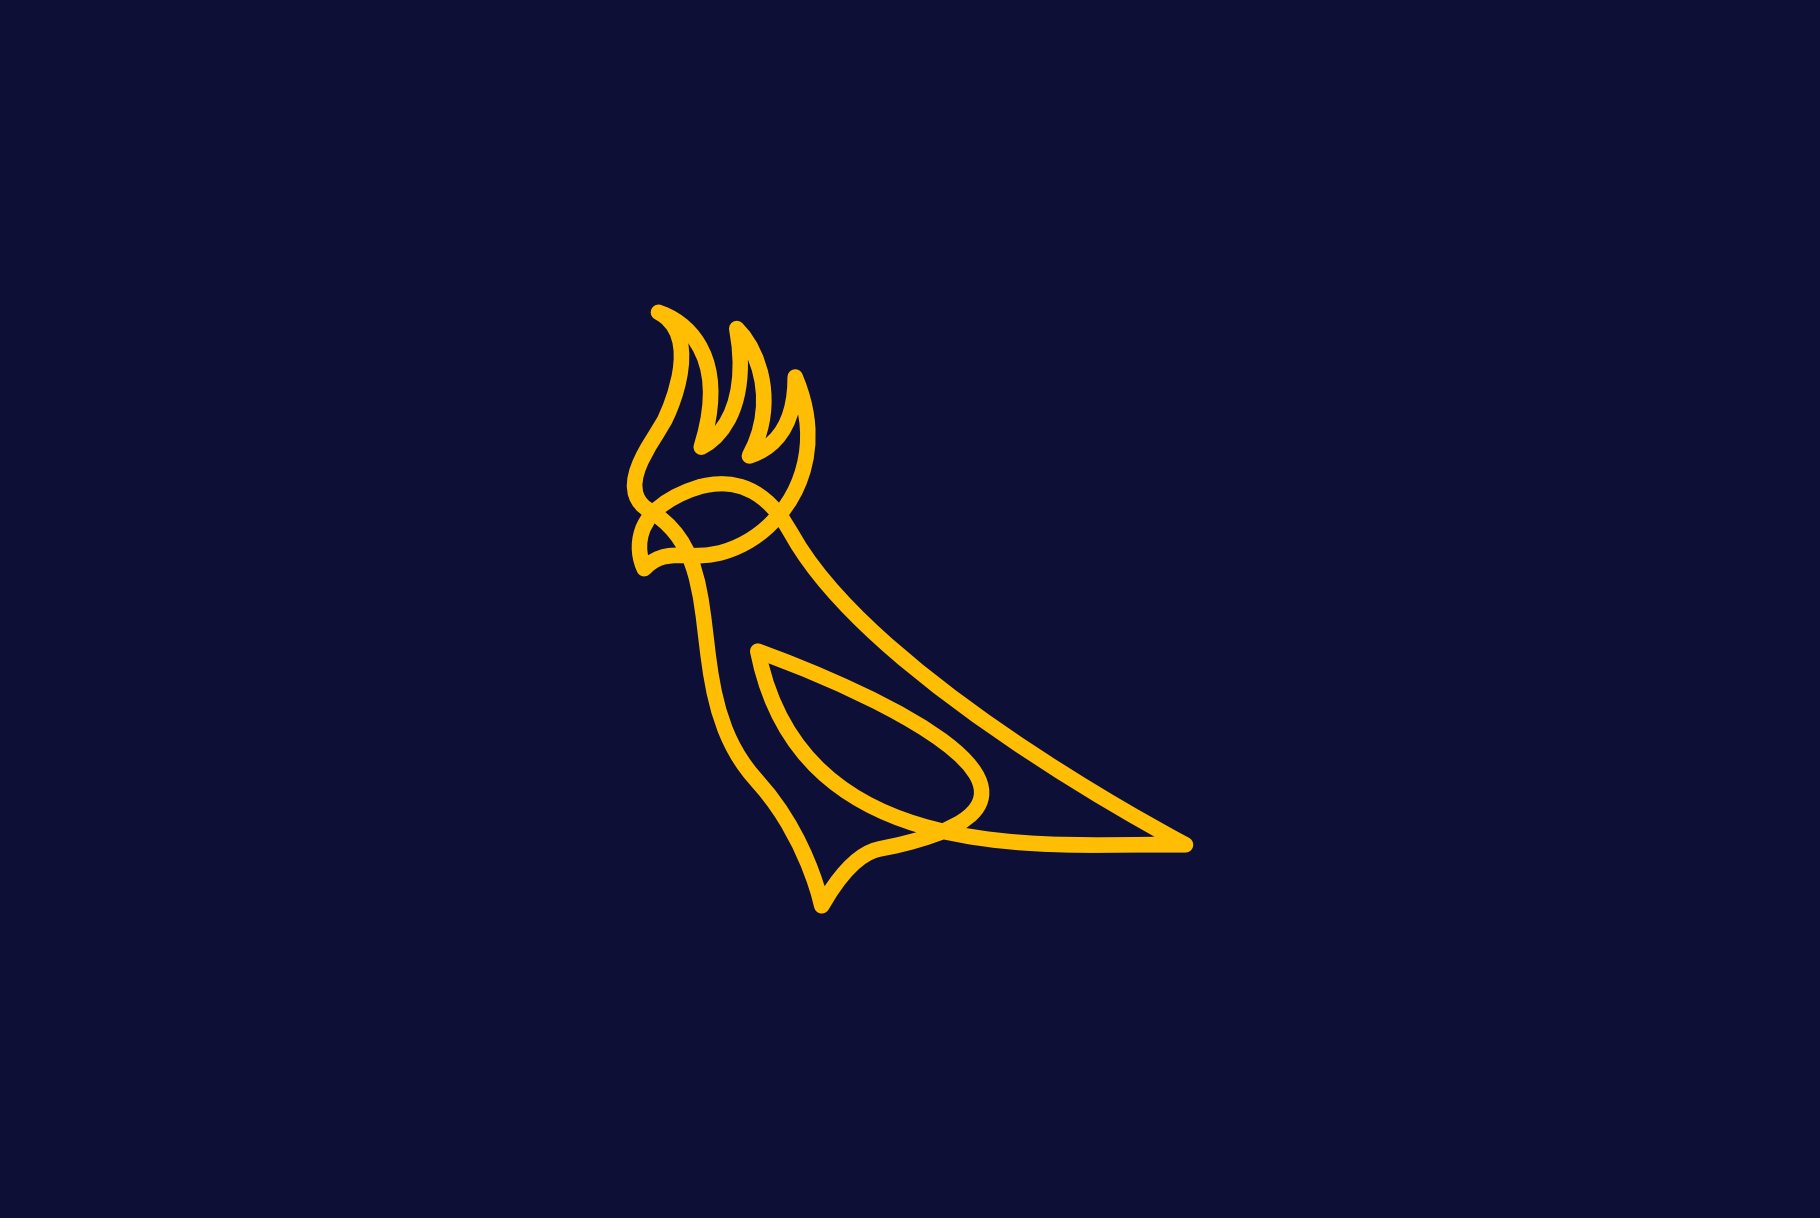 Parrot Monoline Logo cover image.